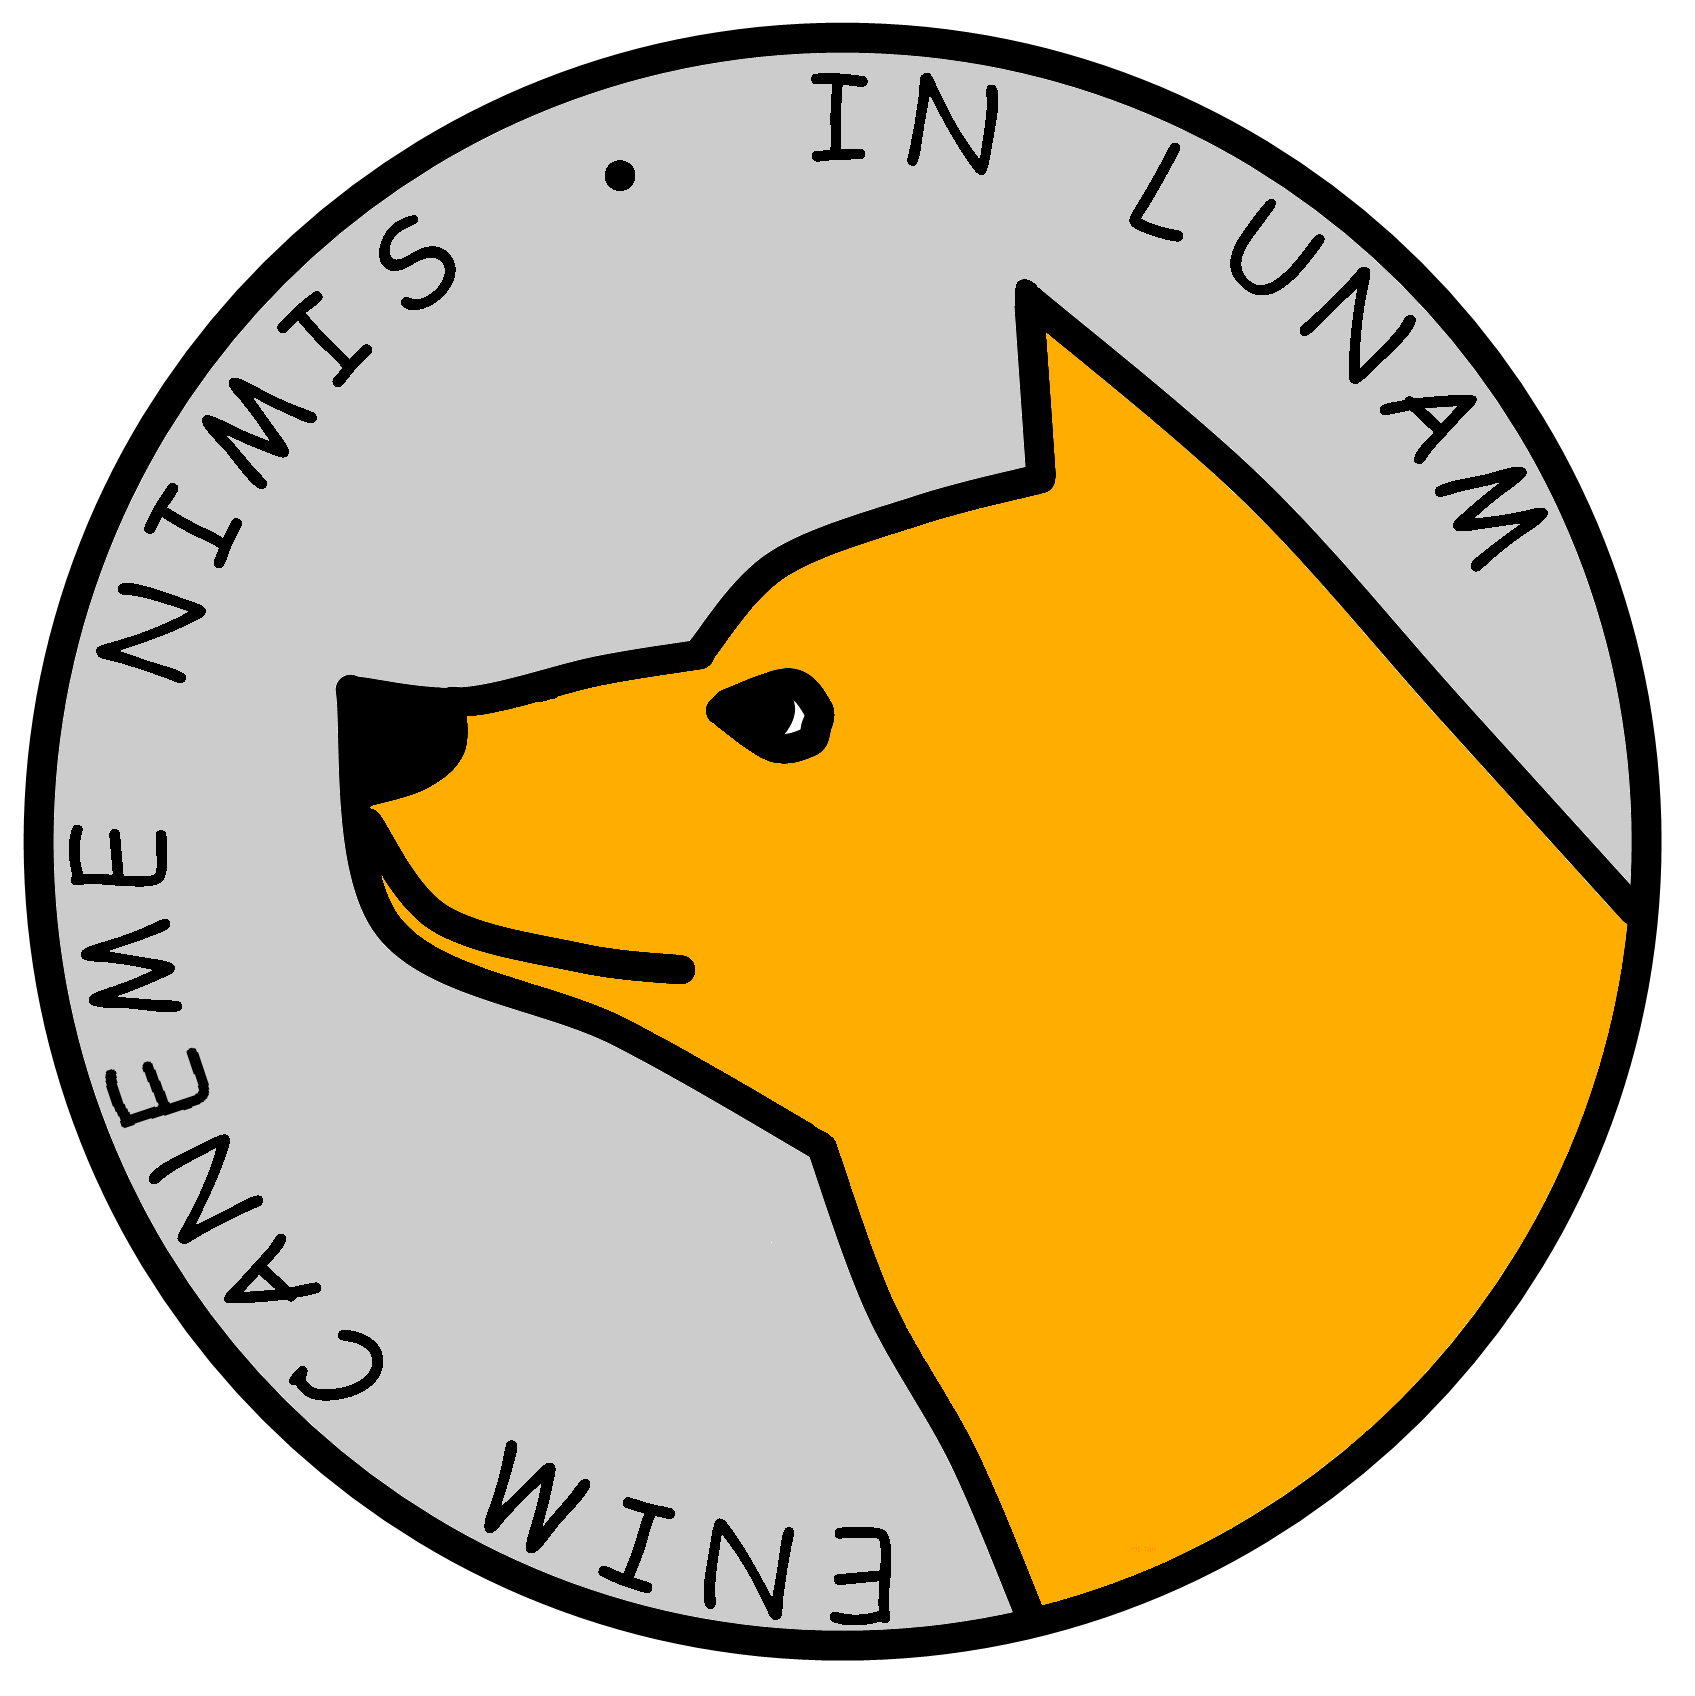 My take on the Dogecoin logo : dogecoin.